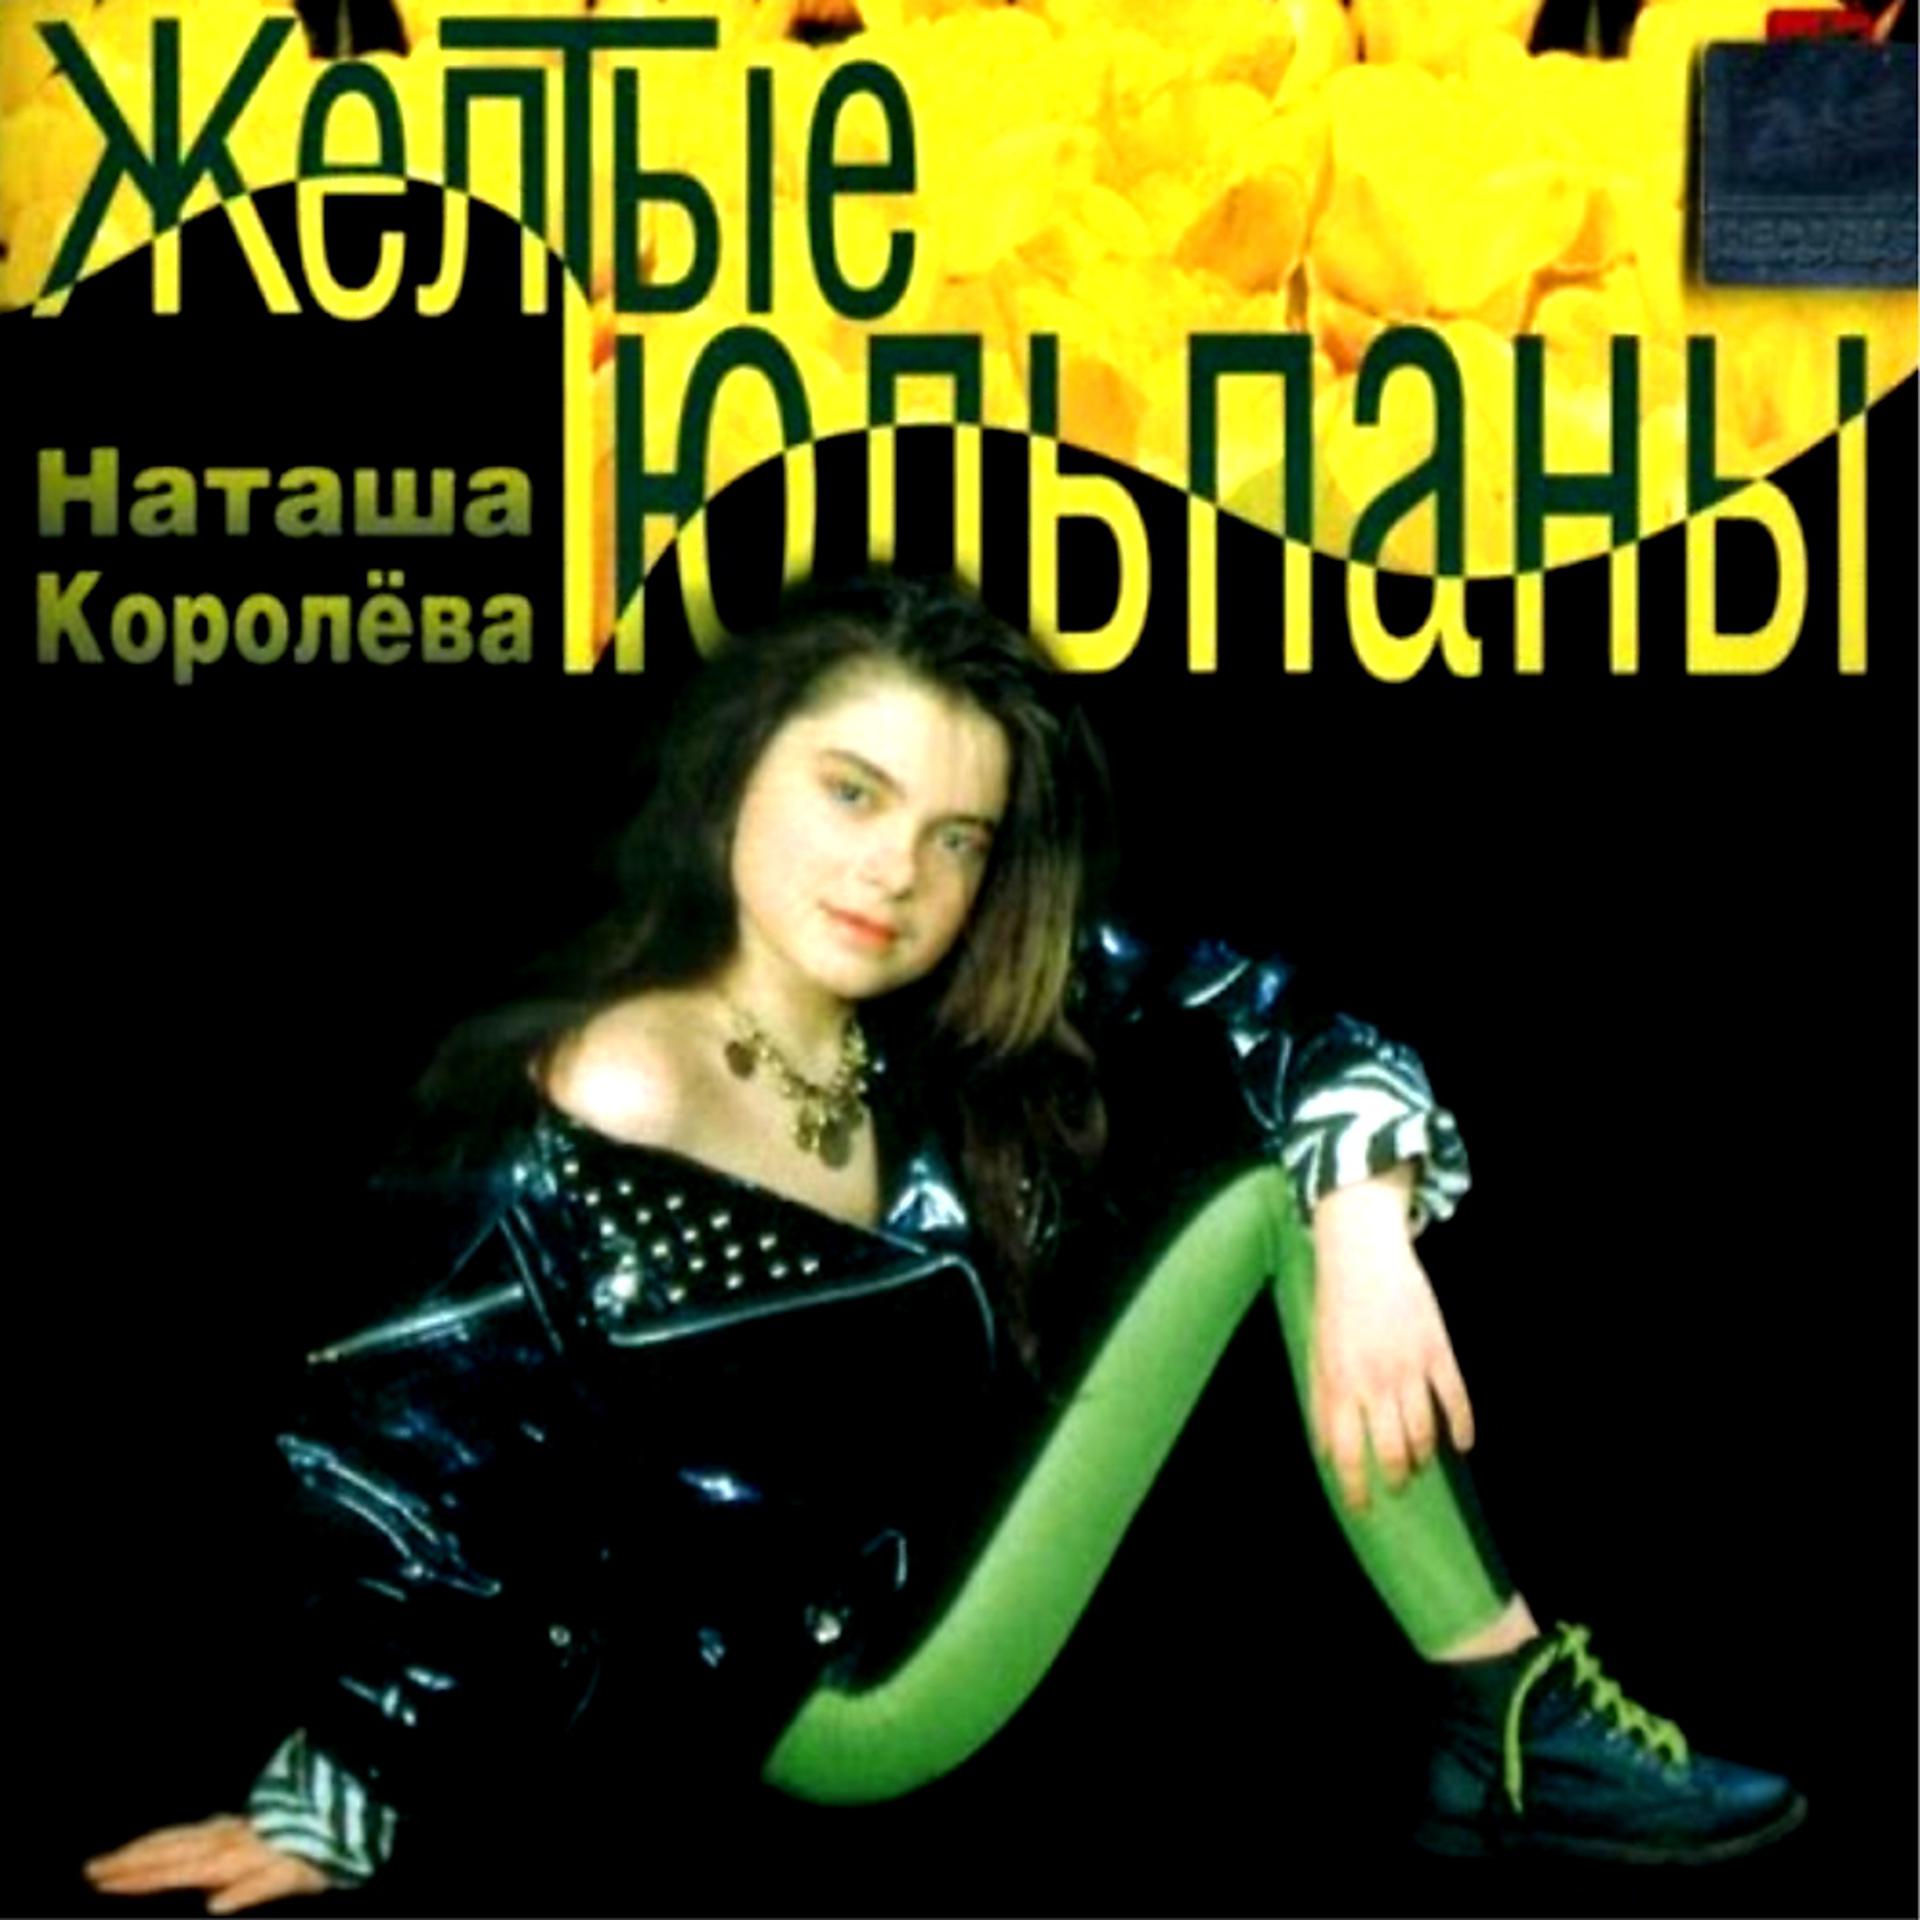 Наташа Королева 1991. Наташа королёва жёлтые тюльпаны 1991. Наташа королёва первый альбом 1990. Наташа королёва жёлтые тюльпаны обложка.